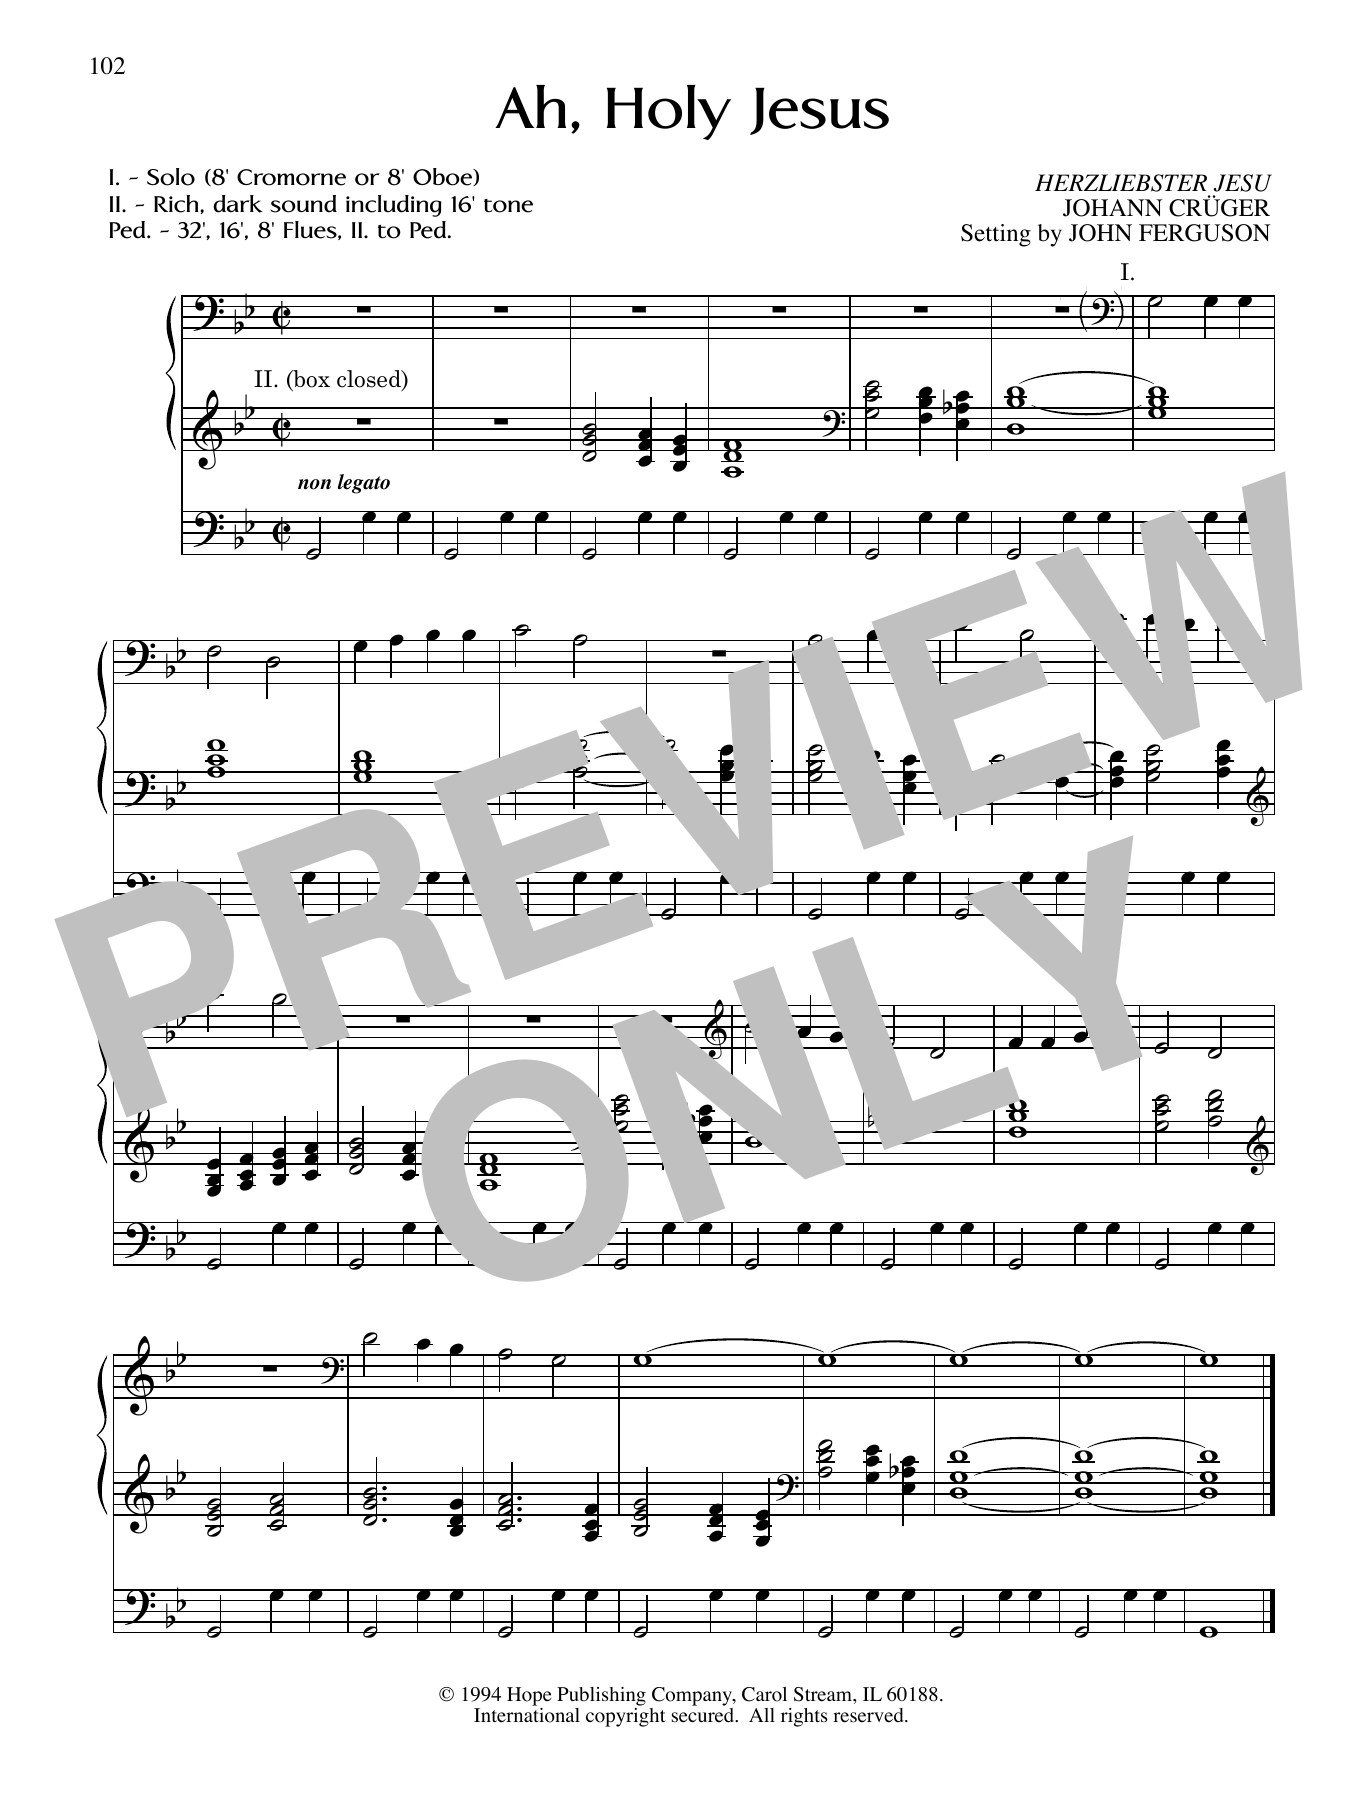 Download JOHN FERGUSON Ah, Holy Jesus Sheet Music and learn how to play Organ PDF digital score in minutes